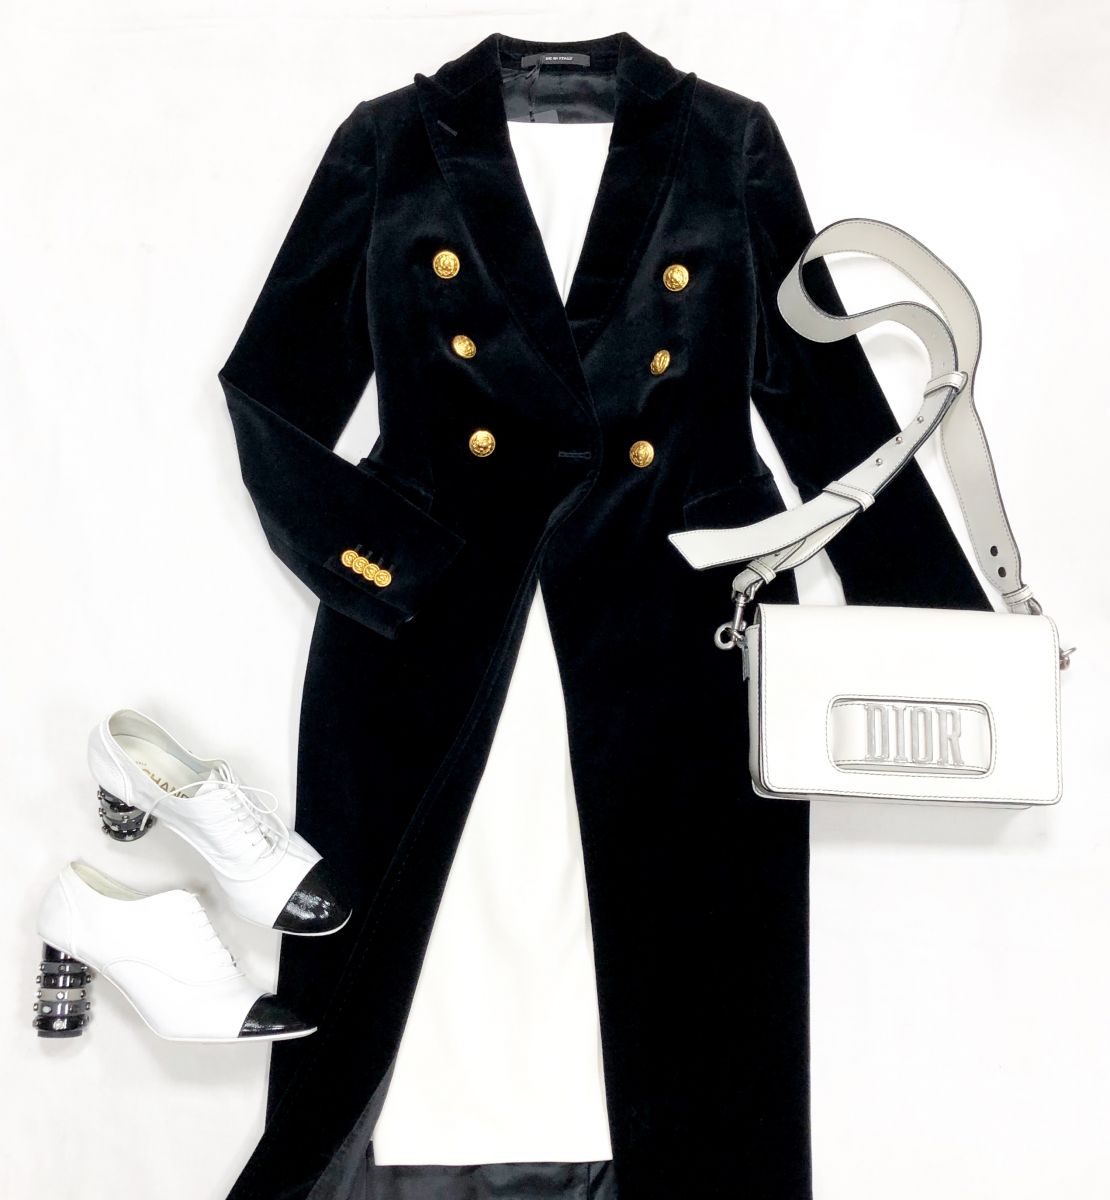 Платье Tom Ford размер 34 цена 30 770 руб
Жакет /бархат/ размер 40 цена 15 385 руб
Ботинки Chanel размер 40 цена 76 925 руб
Сумка Christian Dior 
